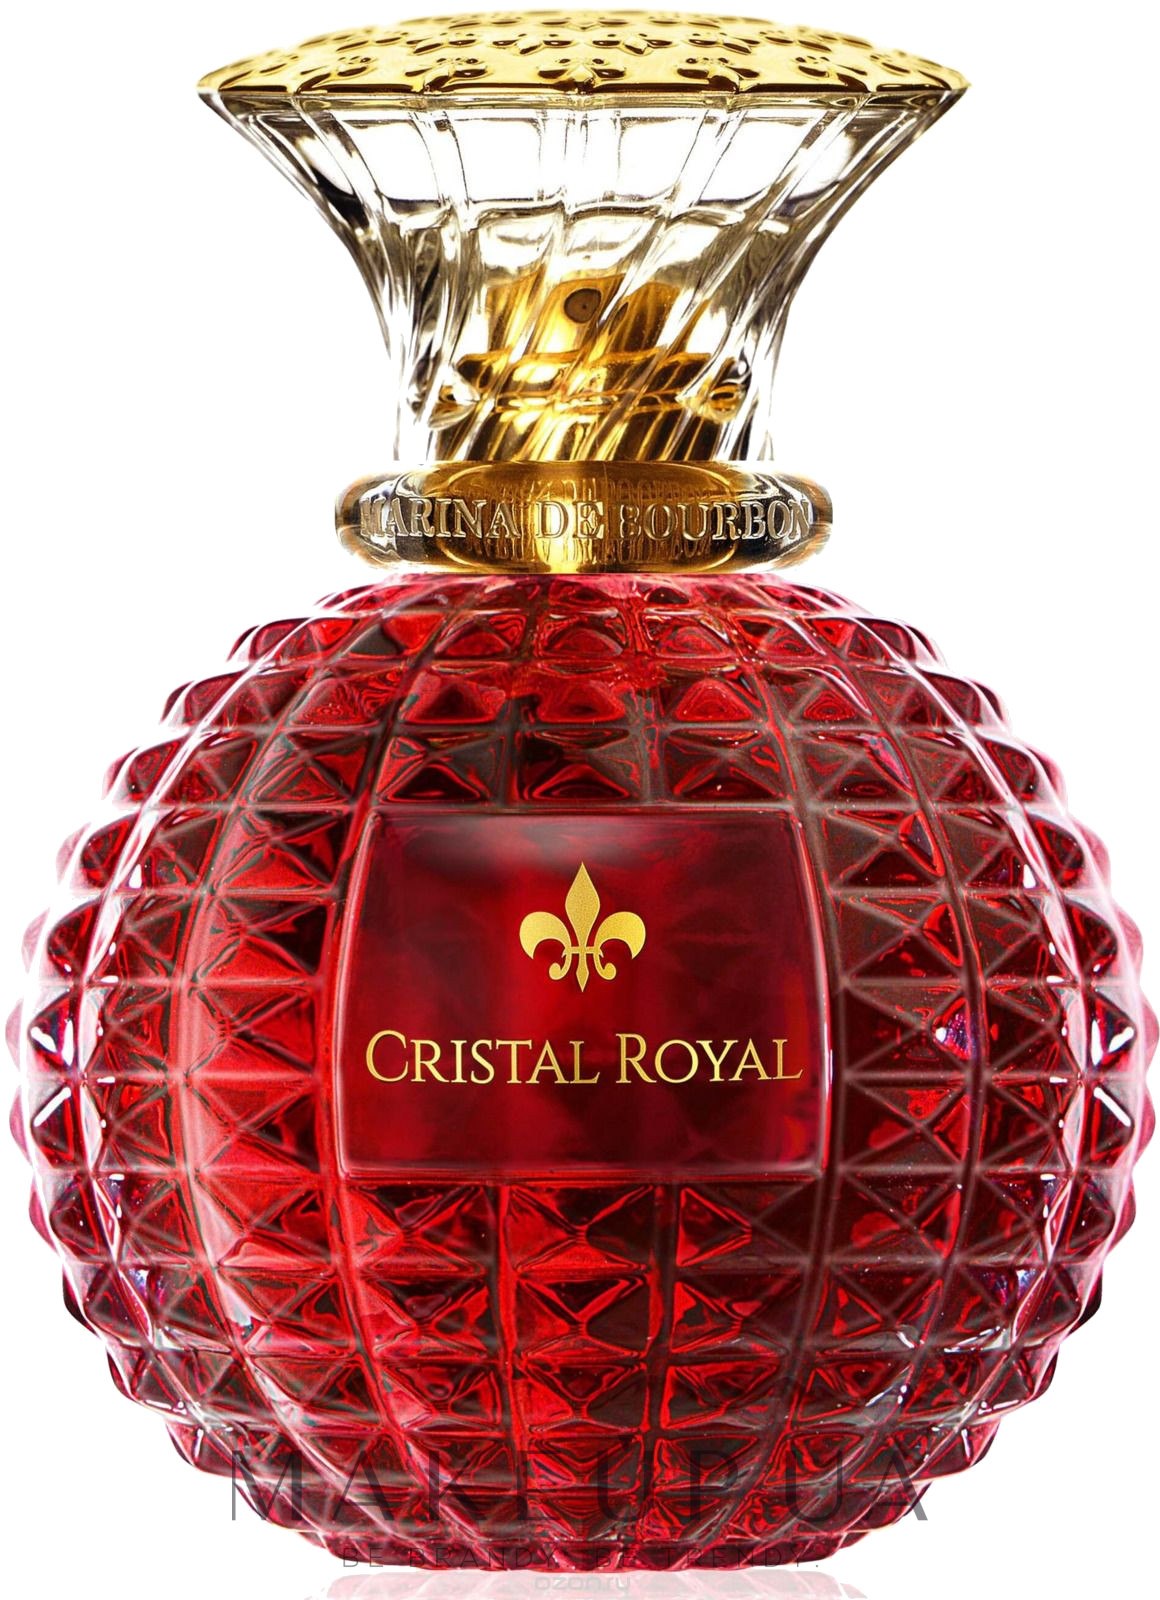 Marina de bourbon cristal royal. Парфюмерная вода Marina de Bourbon Cristal Royal passion. Духи Princesse Marina de Bourbon. M. de Bourbon Cristal Royal w EDP 30 ml [m].